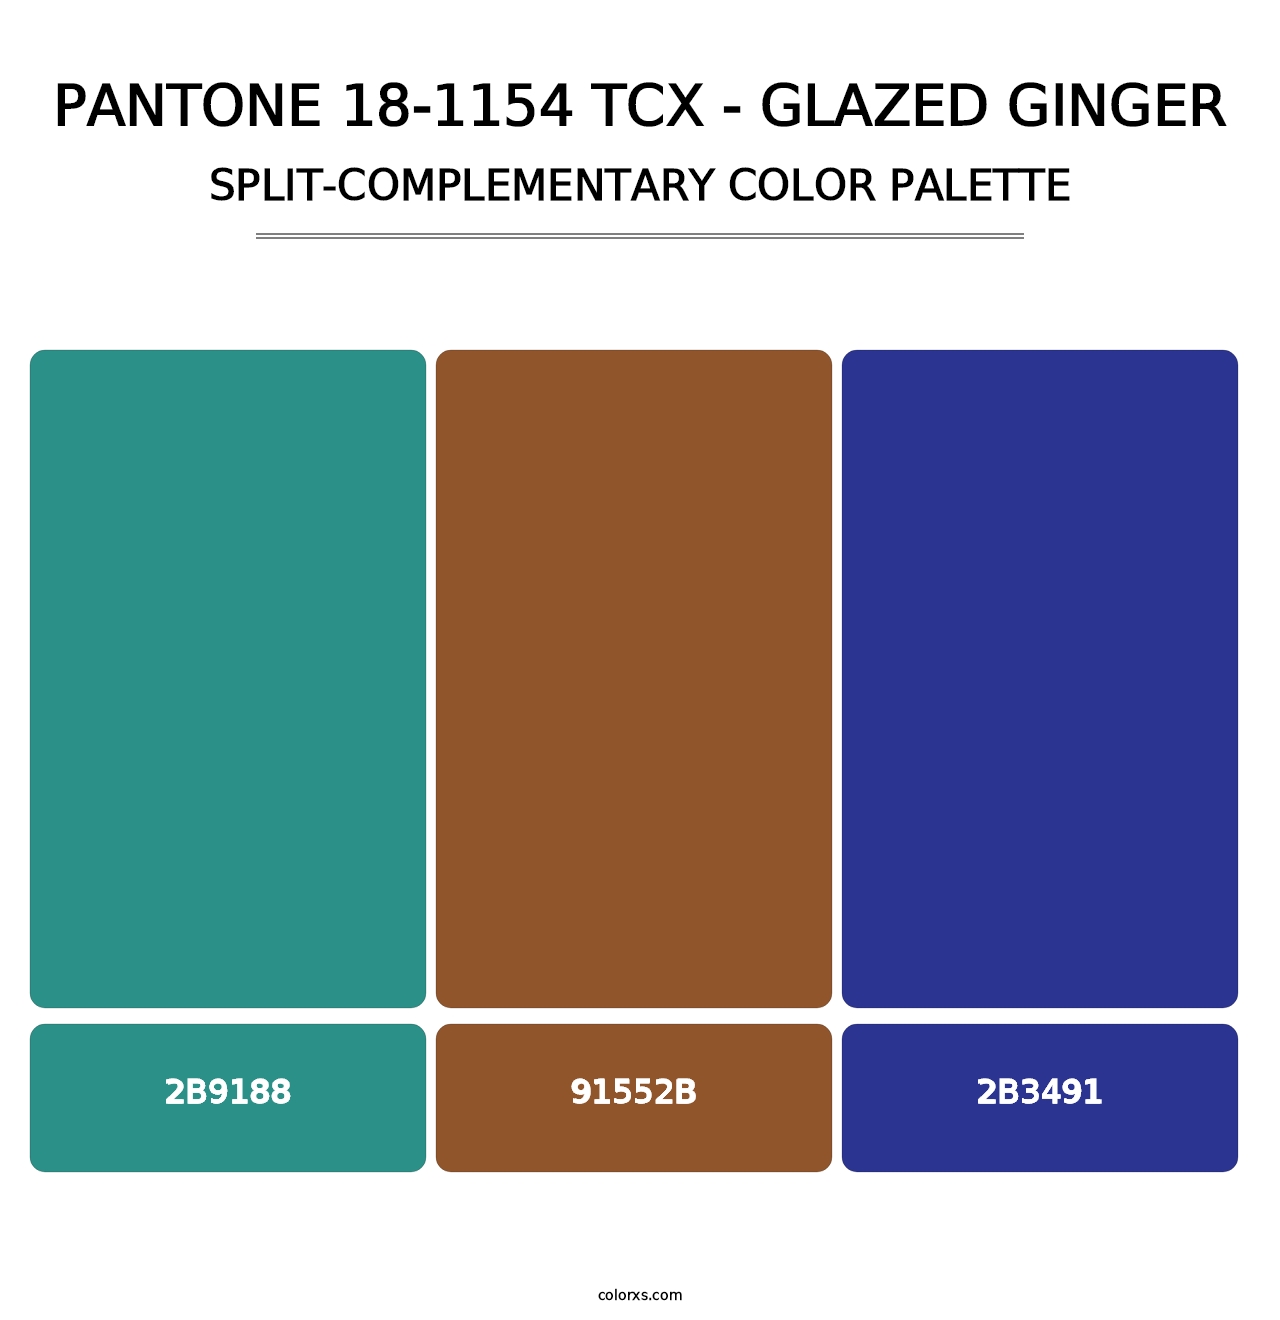 PANTONE 18-1154 TCX - Glazed Ginger - Split-Complementary Color Palette